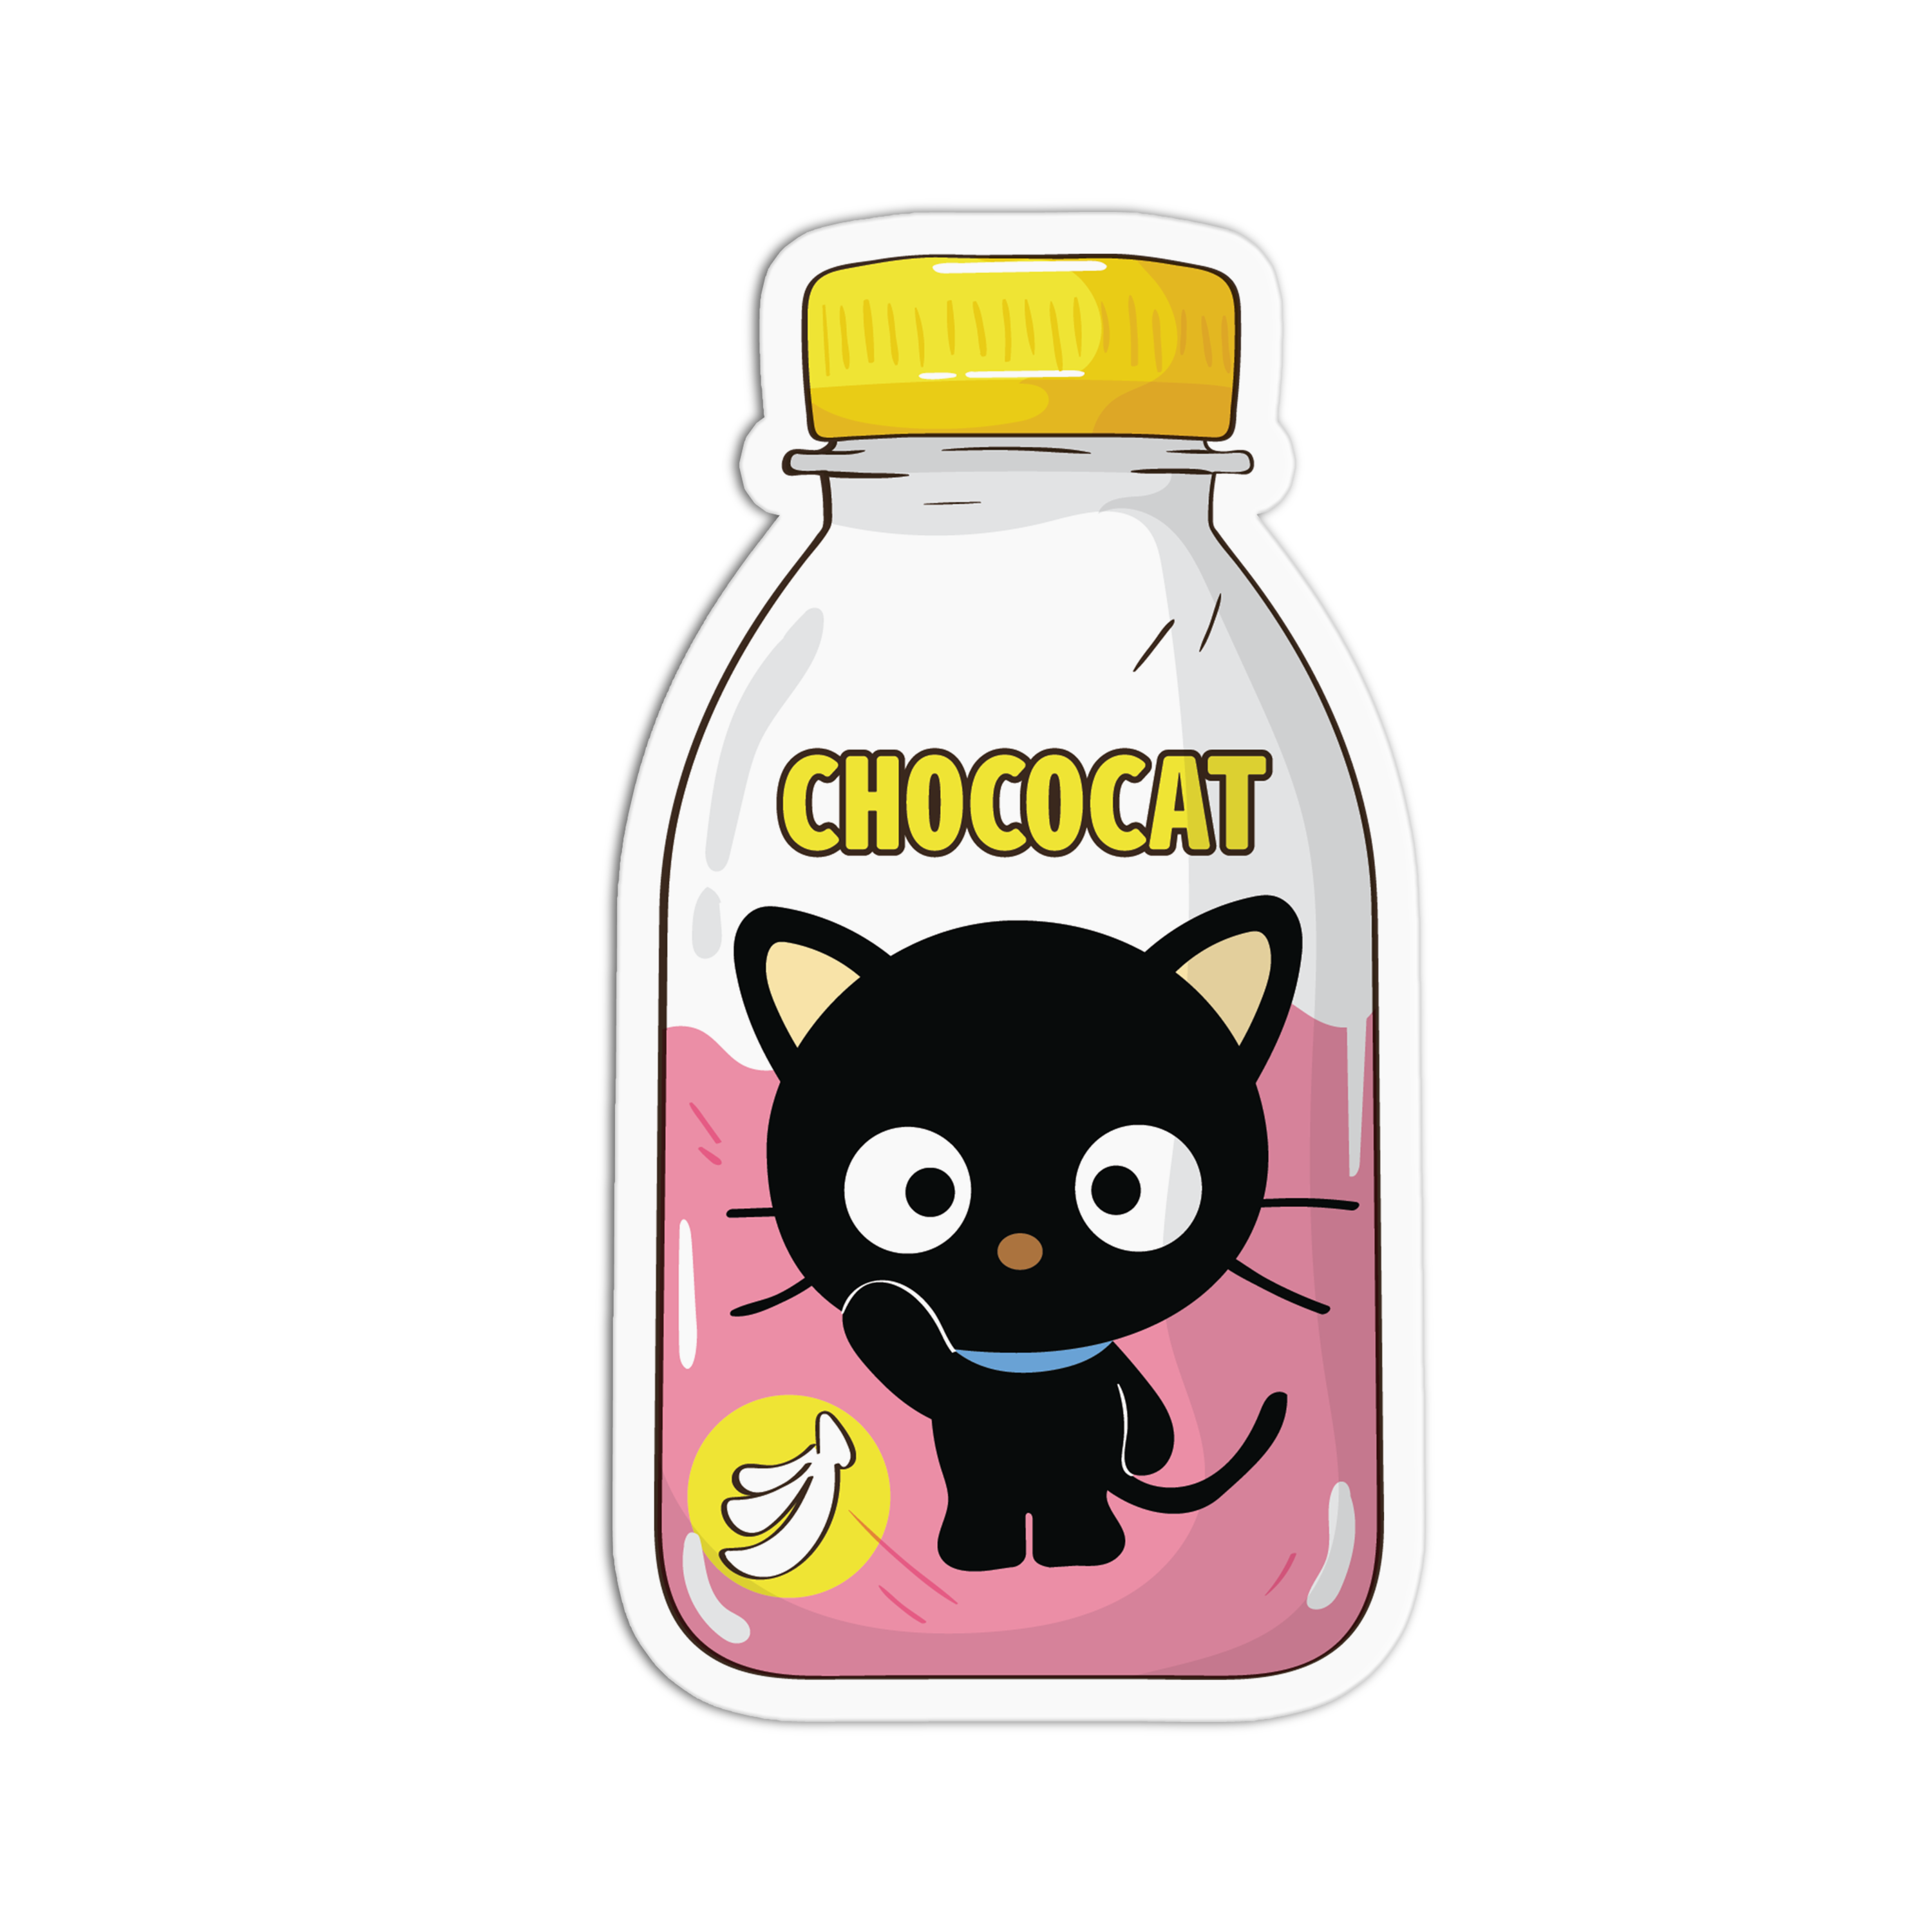 Choco Cat Sanrio Retro Photo Sticker Holder